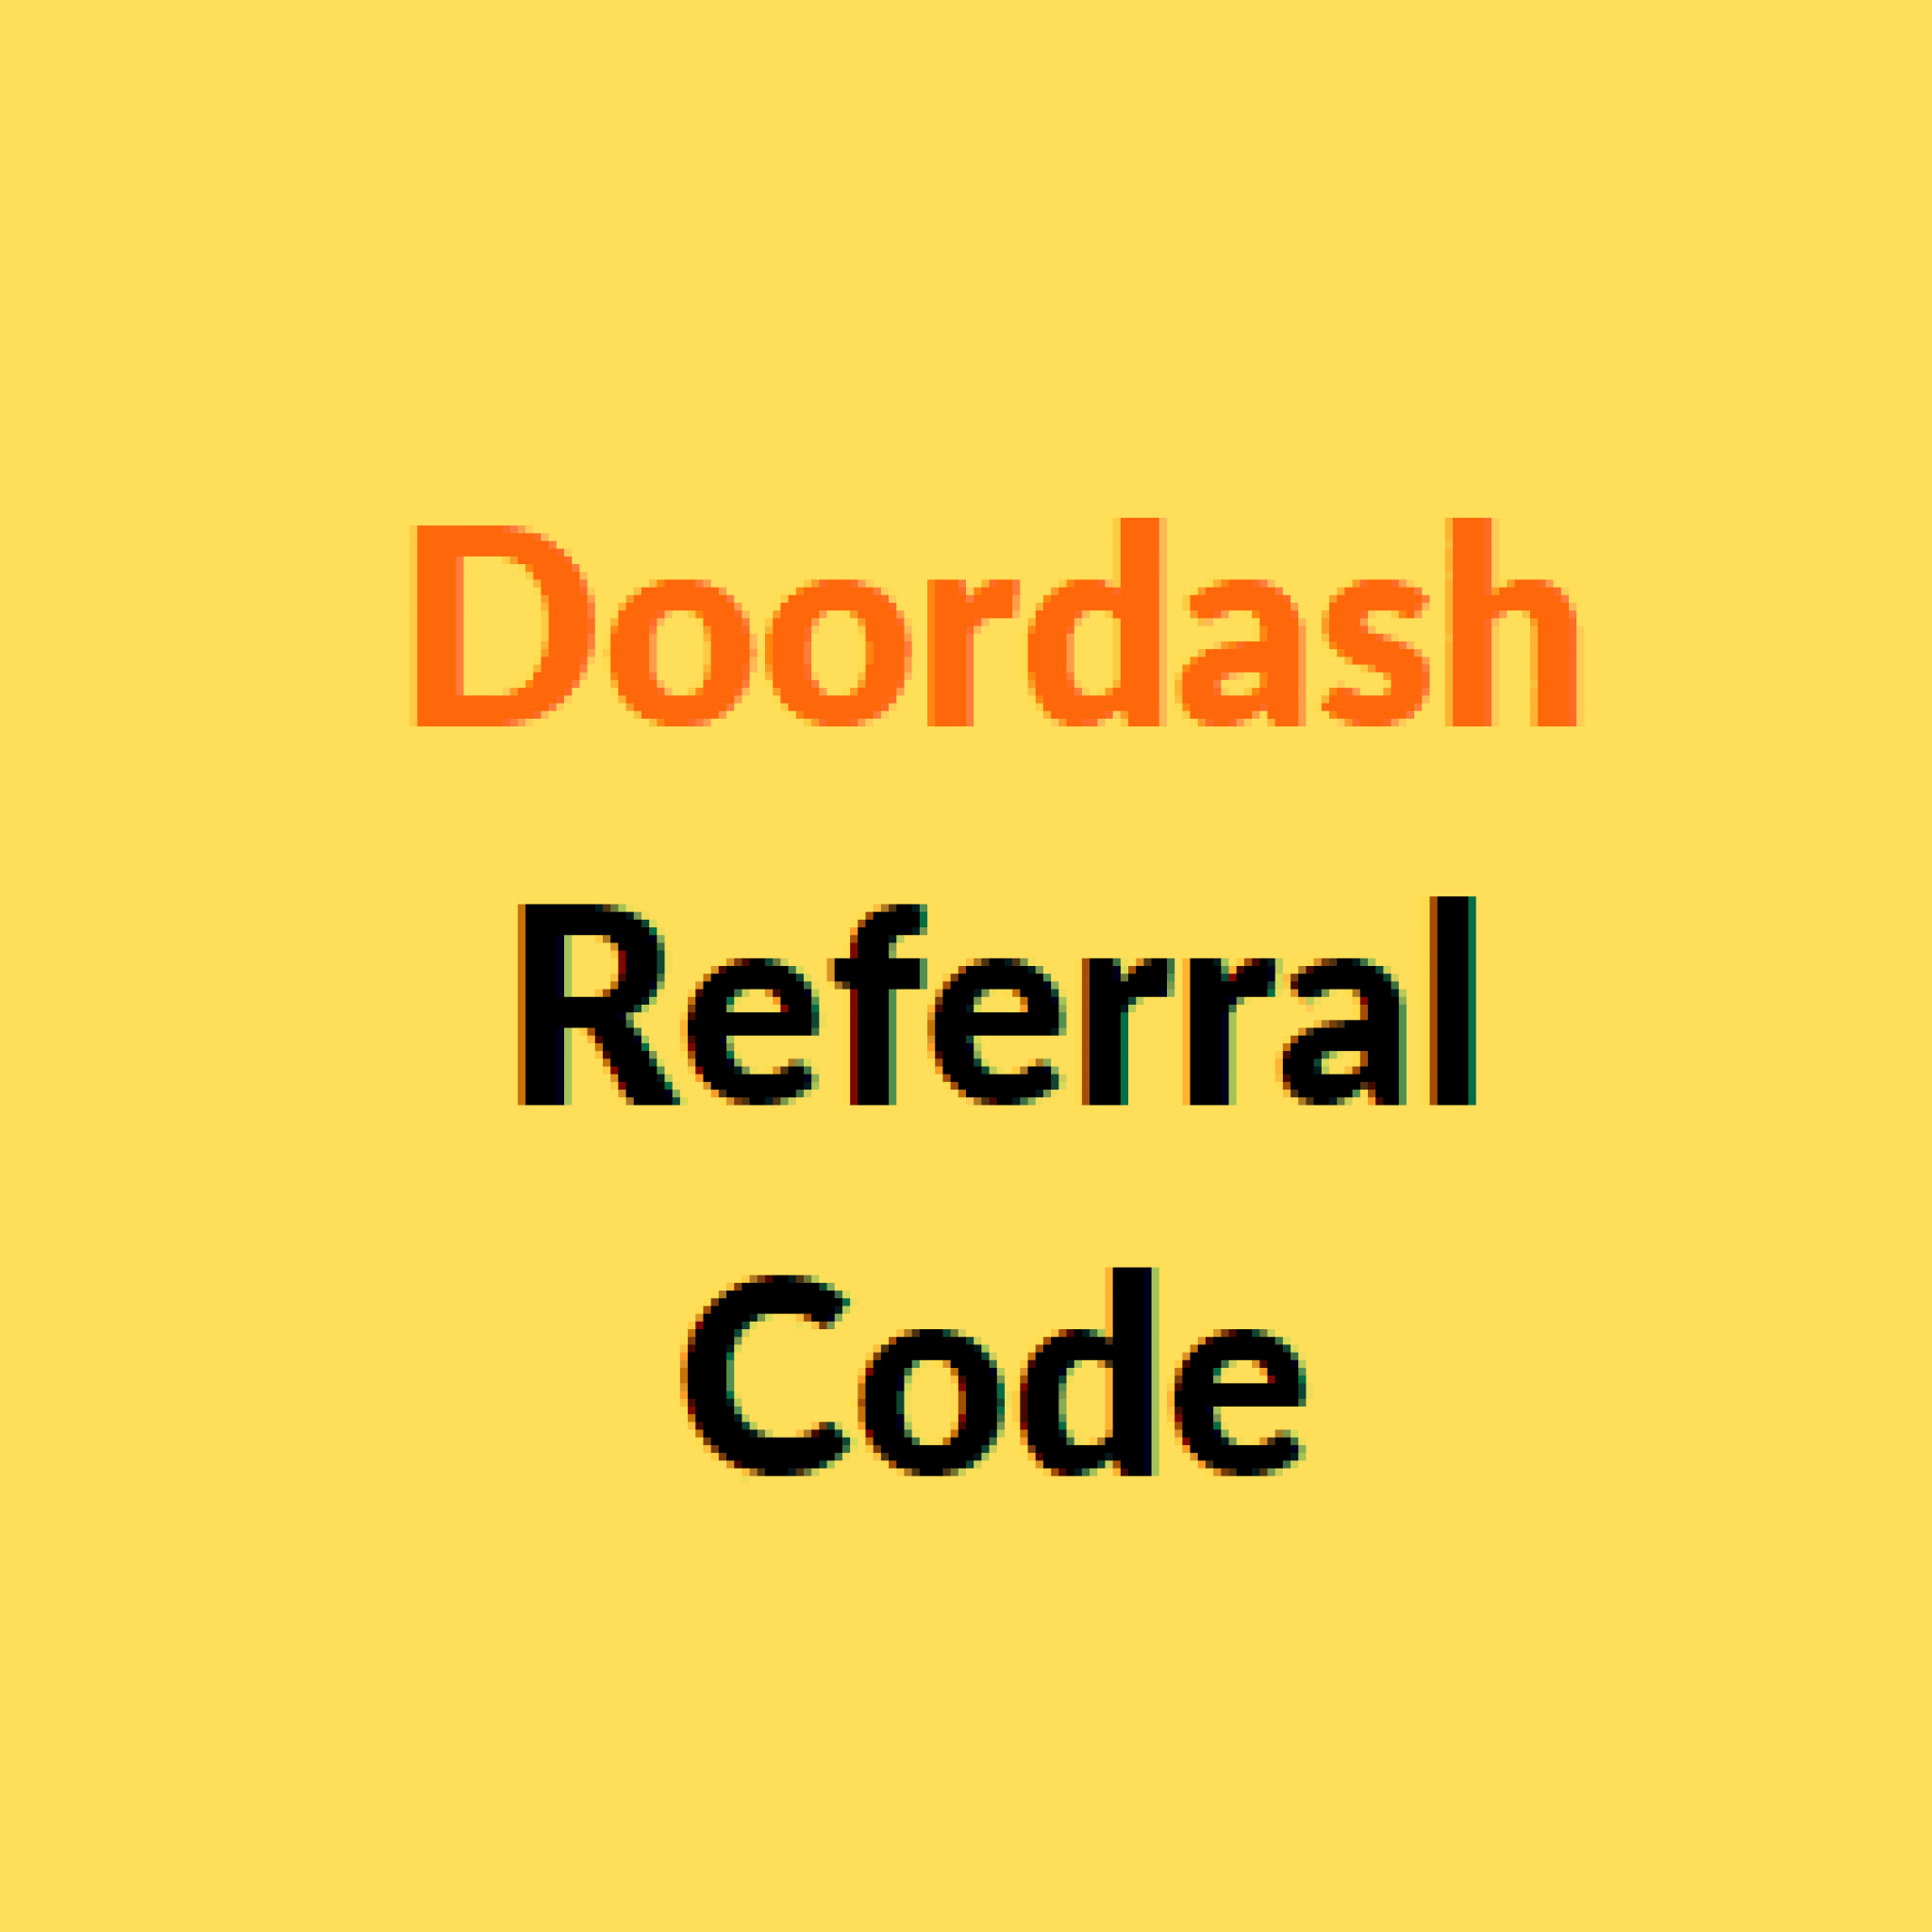 how to earn credits on doordash